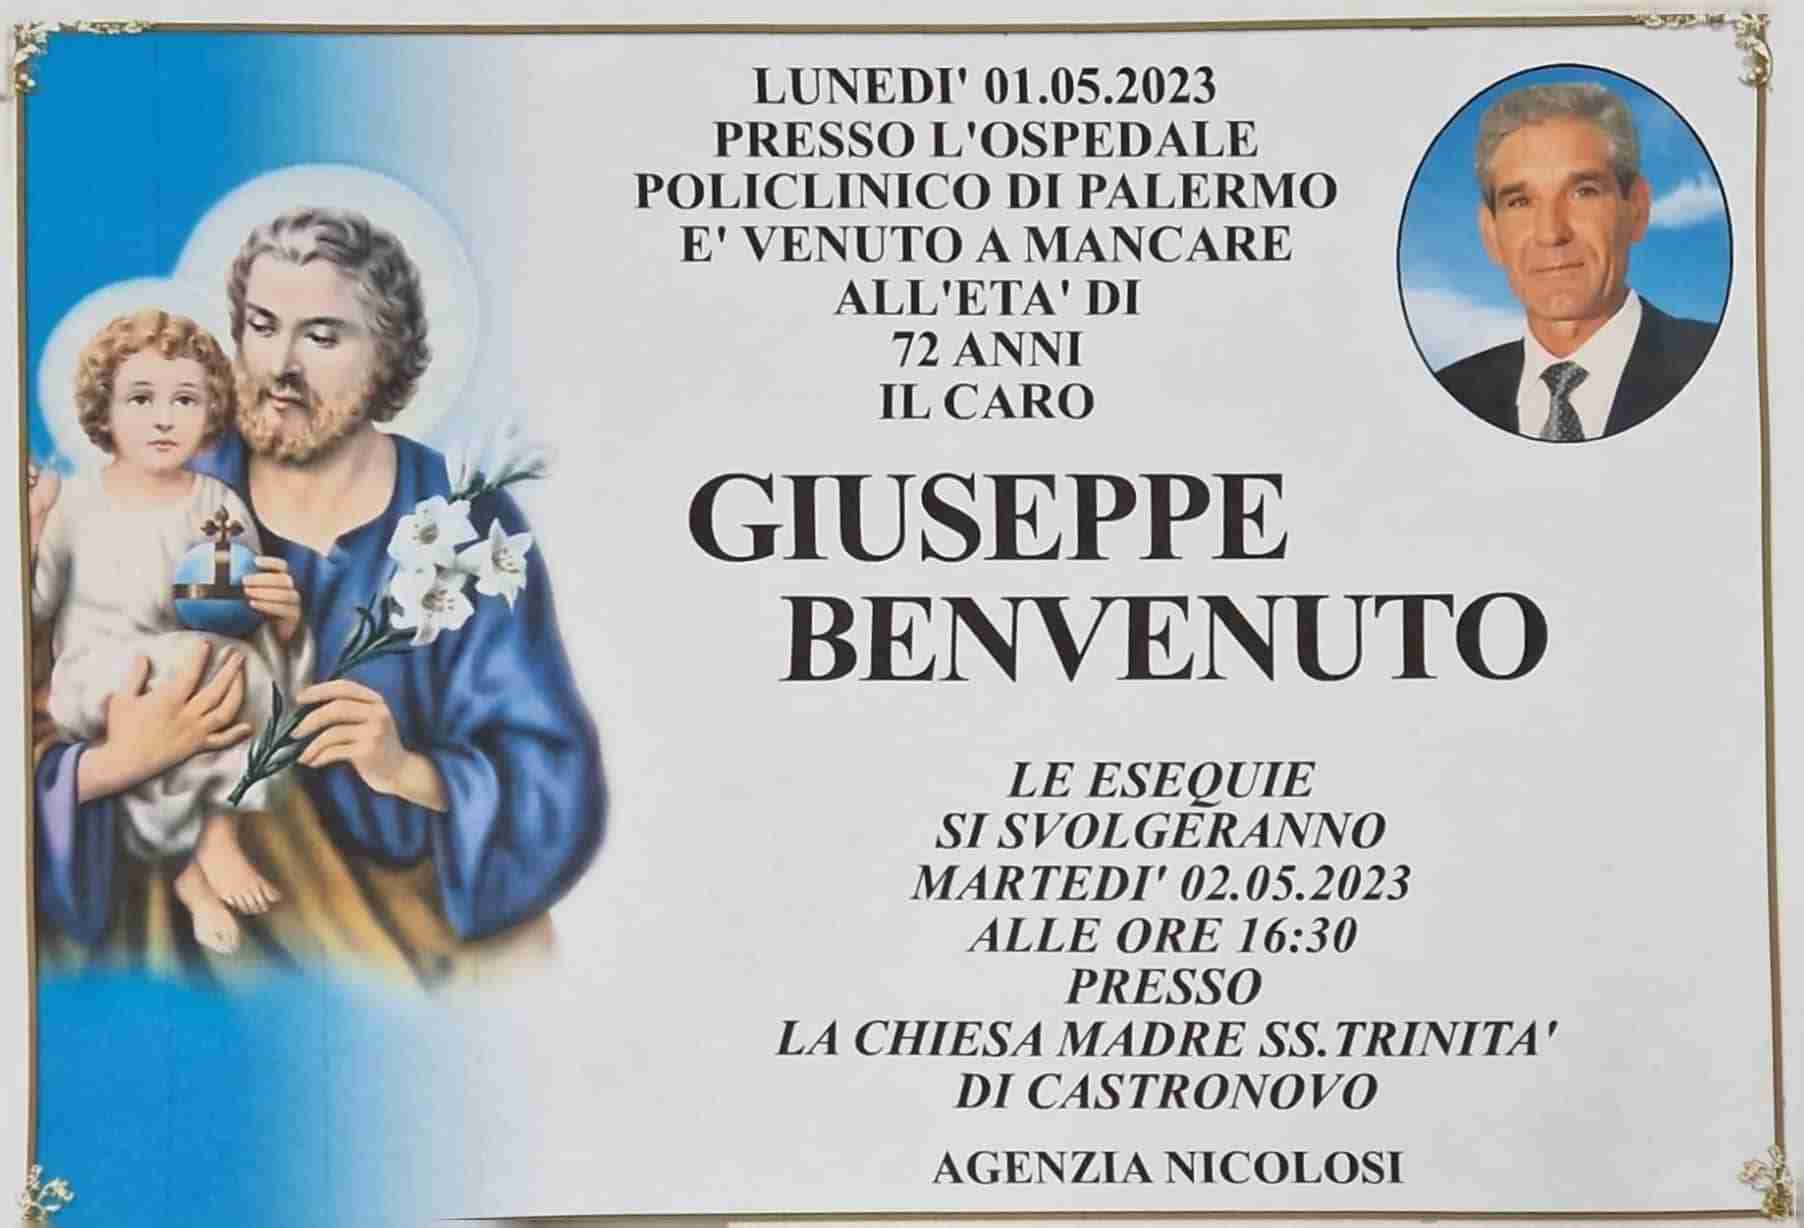 Giuseppe Benvenuto